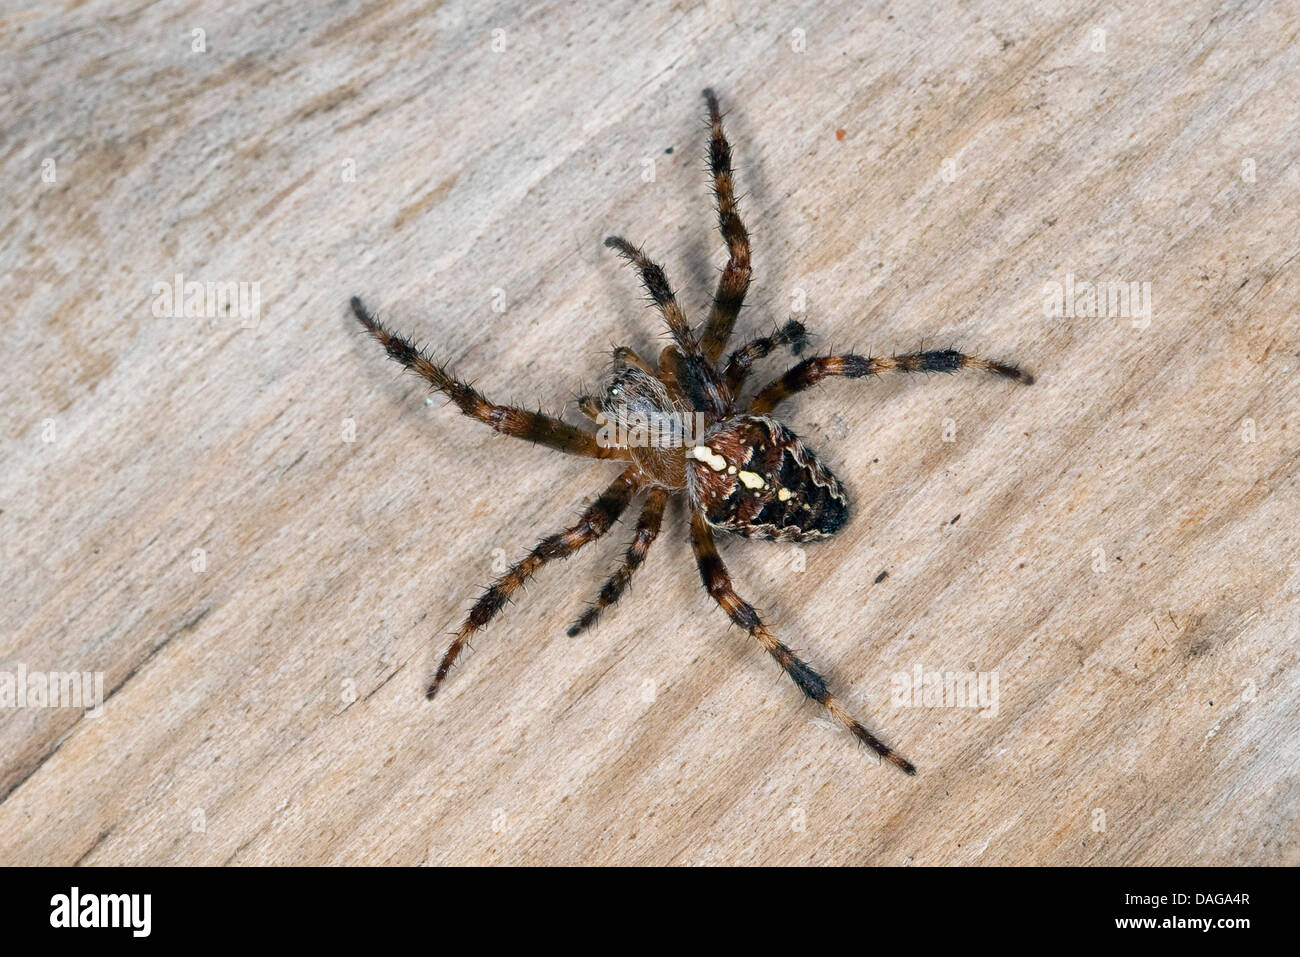 Croce orbweaver, giardino europeo spider, cross spider (Araneus diadematus), seduti su deadwood, Germania Foto Stock